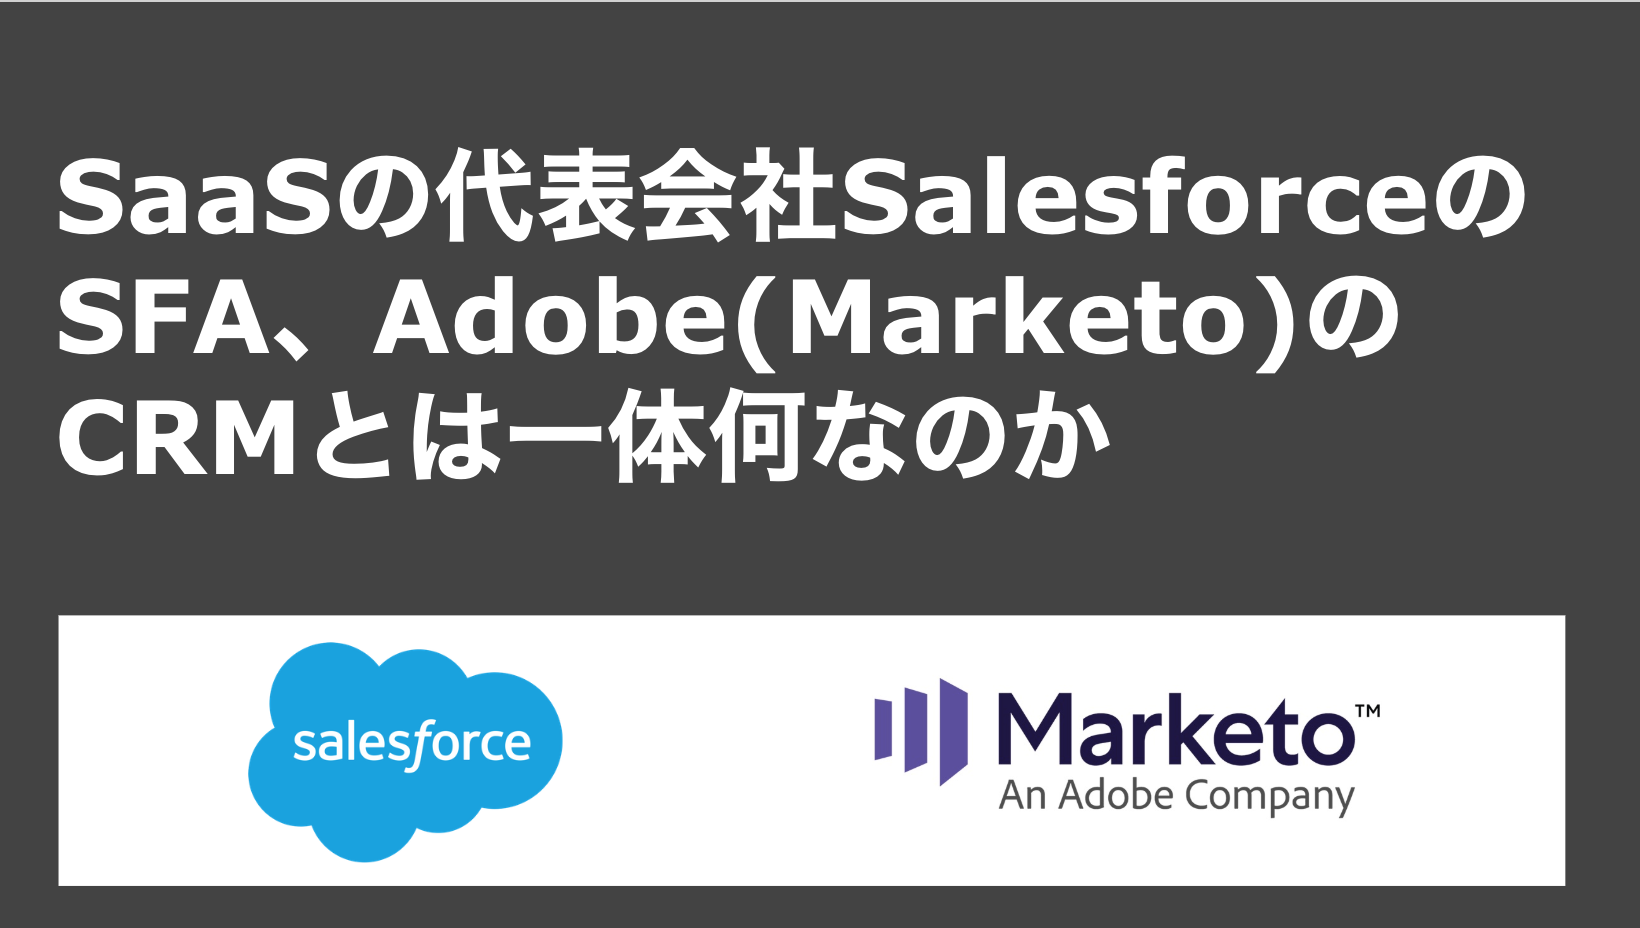 saaslife_SaaSの代表会社SalesforceのSFA、Adobe(Marketo)のCRMとは一体何なのか